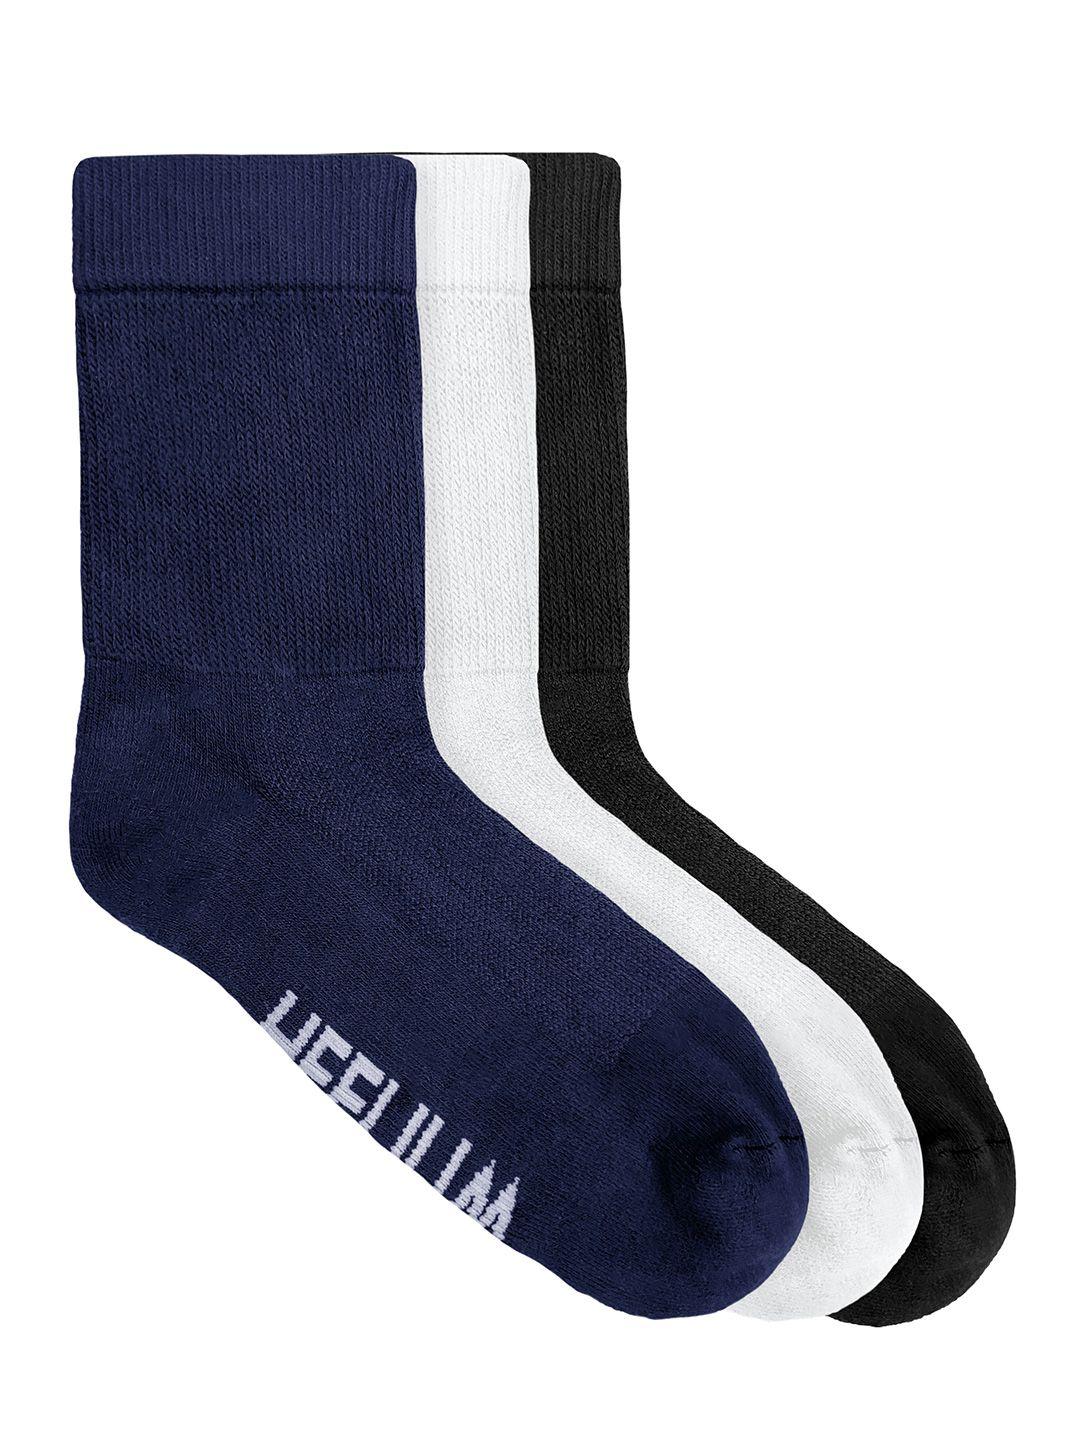 heelium unisex navy blue & black pack of 3 calf length socks